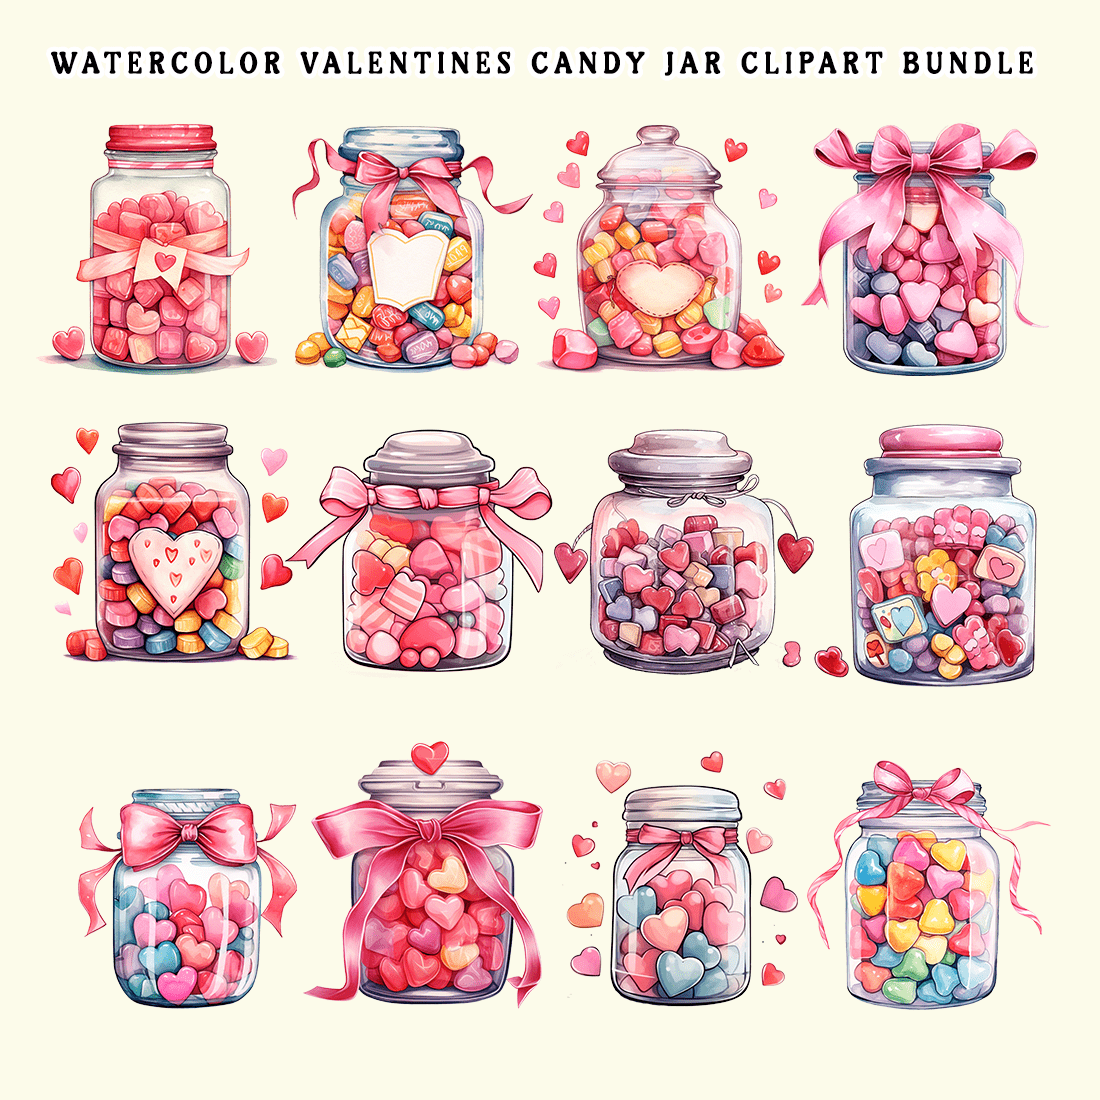 Watercolor Valentines Candy Jar Clipart Bundle preview image.